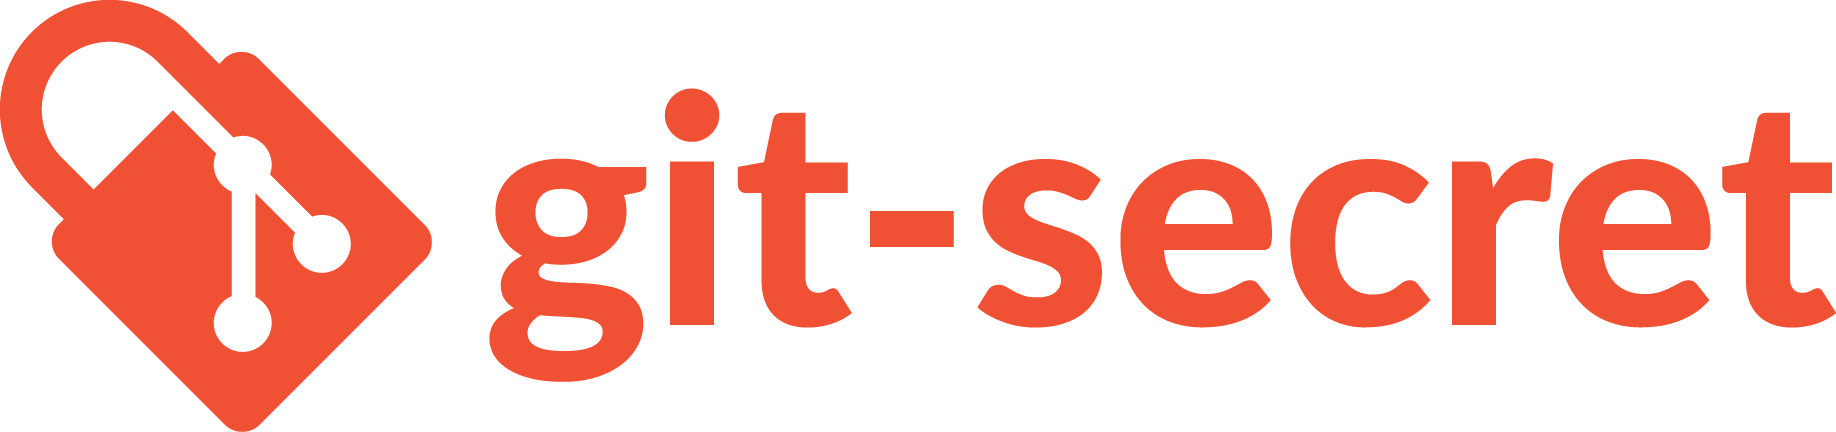 git-secret-io-logo